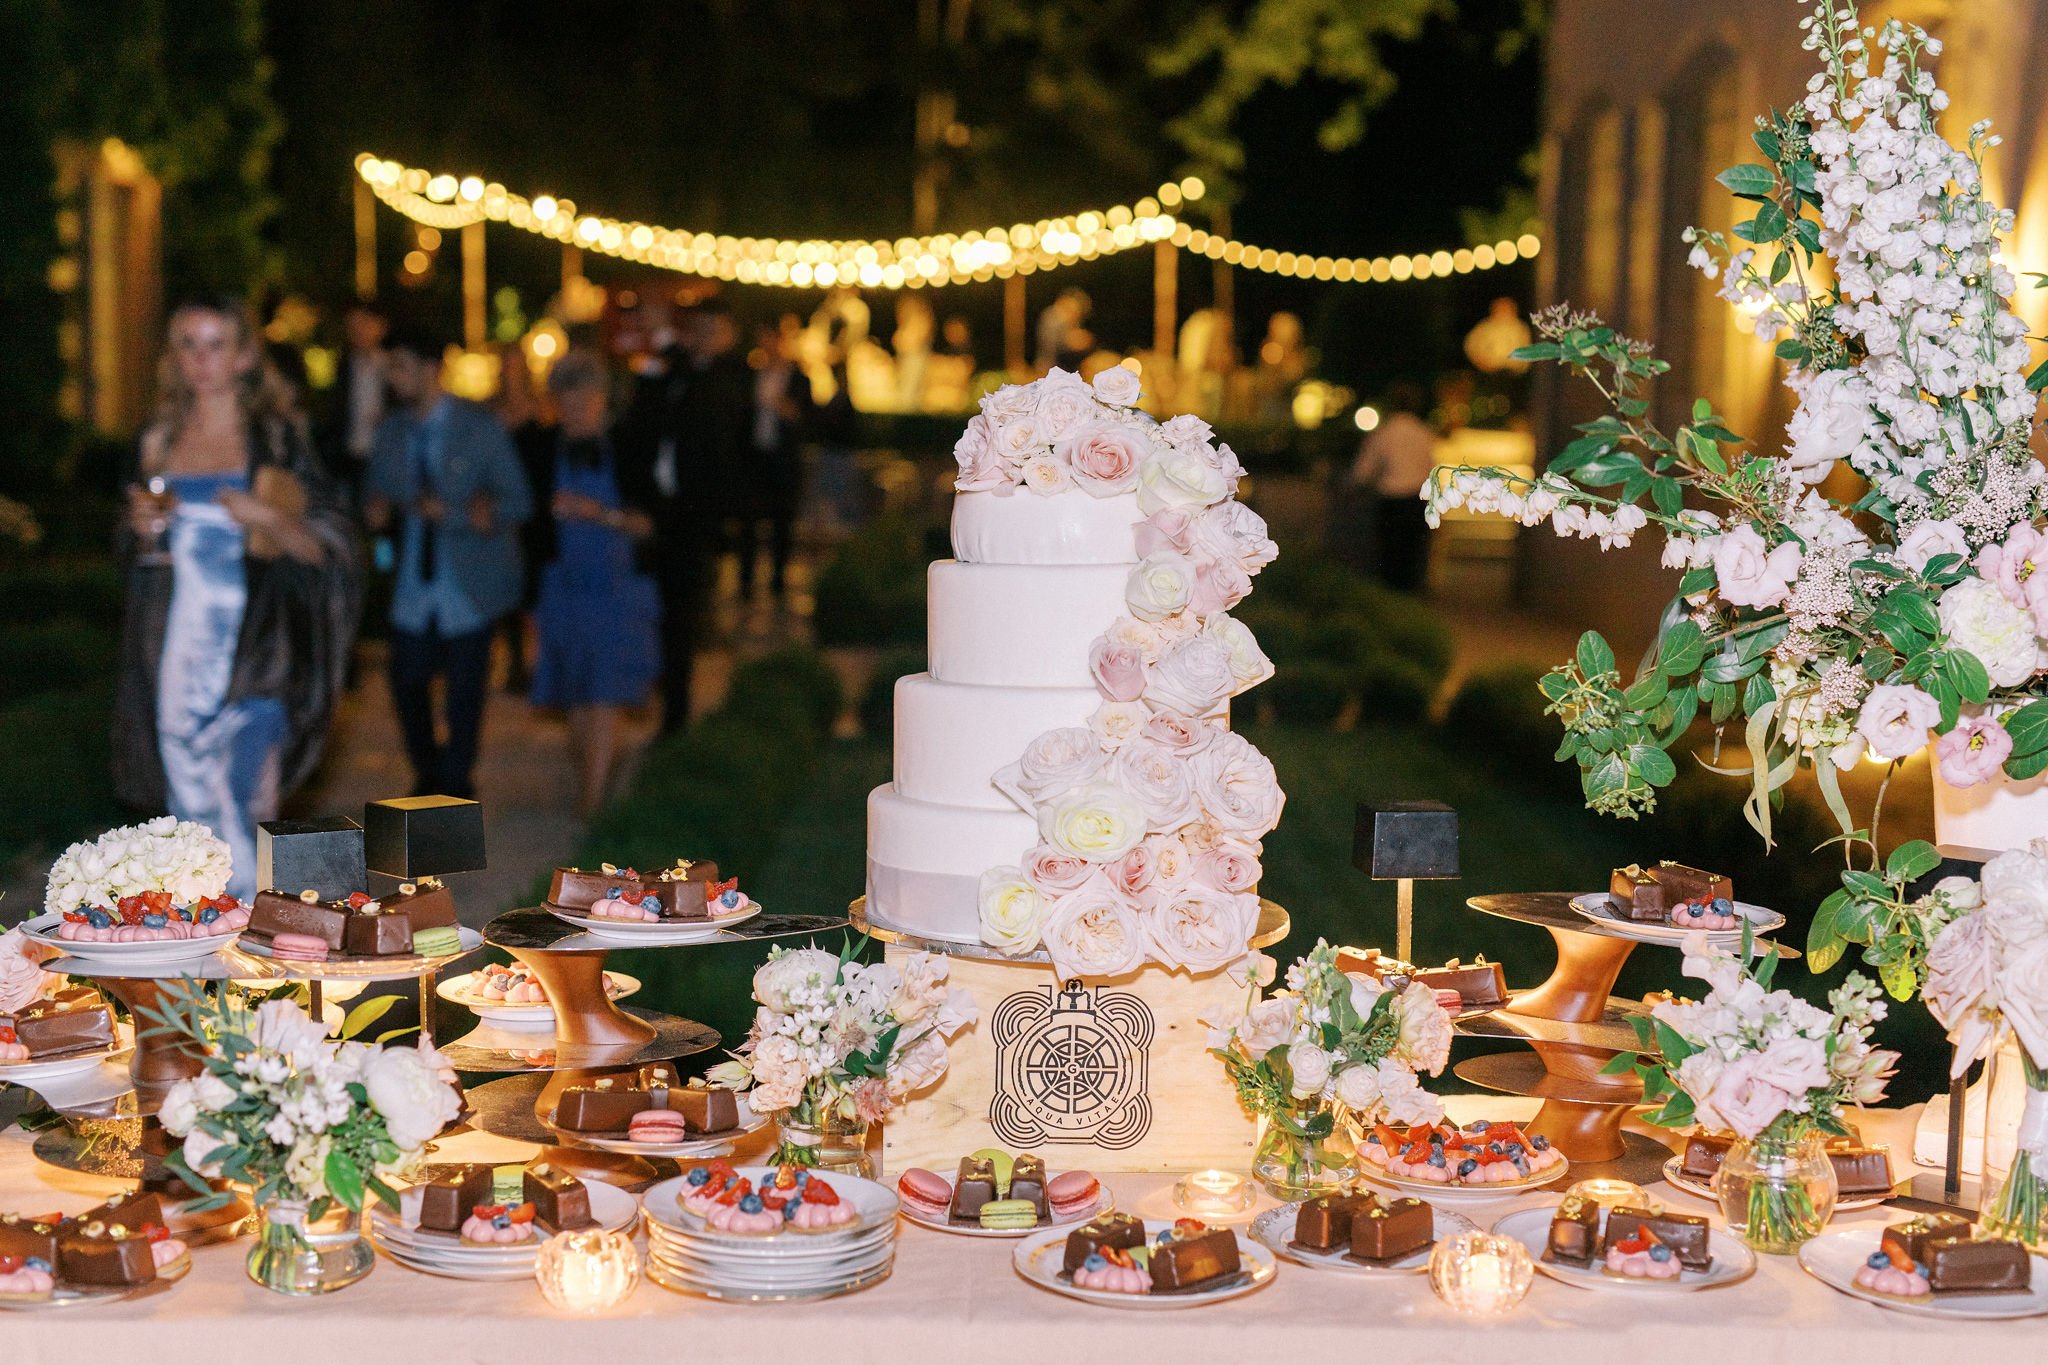 Wedding-dessert-buffet-wedding-cake-small-mignardises-wedding-catering.jpg